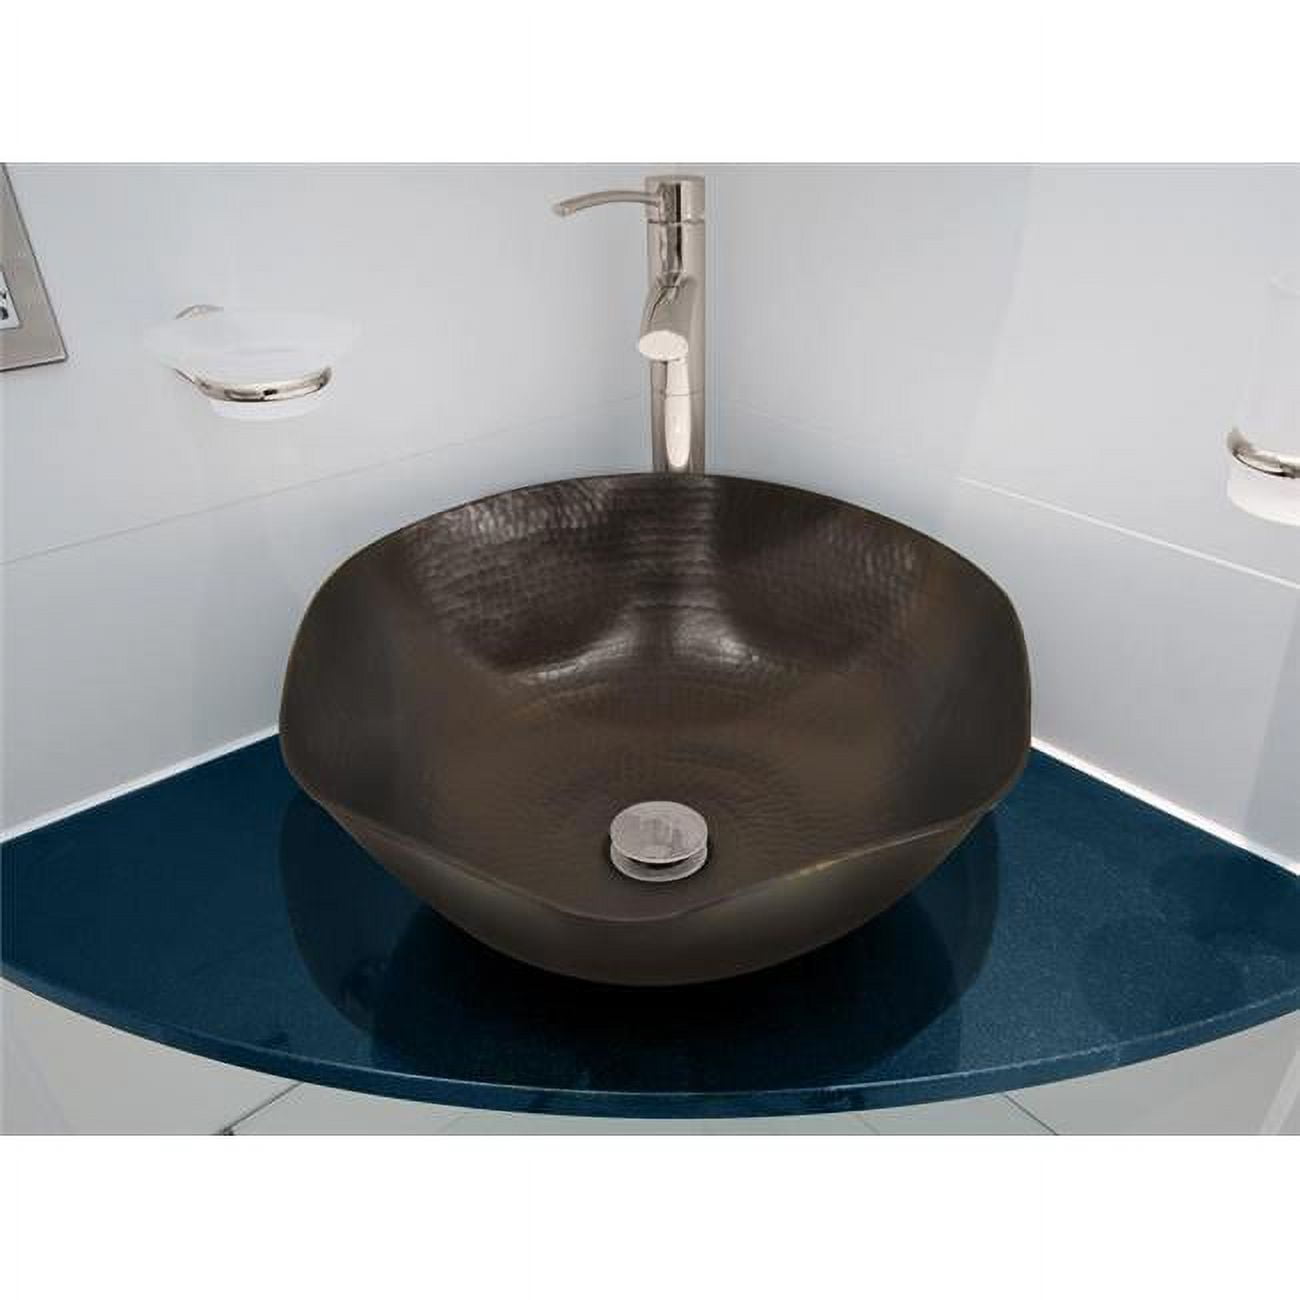 Chvsb-16-ma Copper Hexagonal Vessel Sink, Matte - 5.5 X 16 X 16 In.